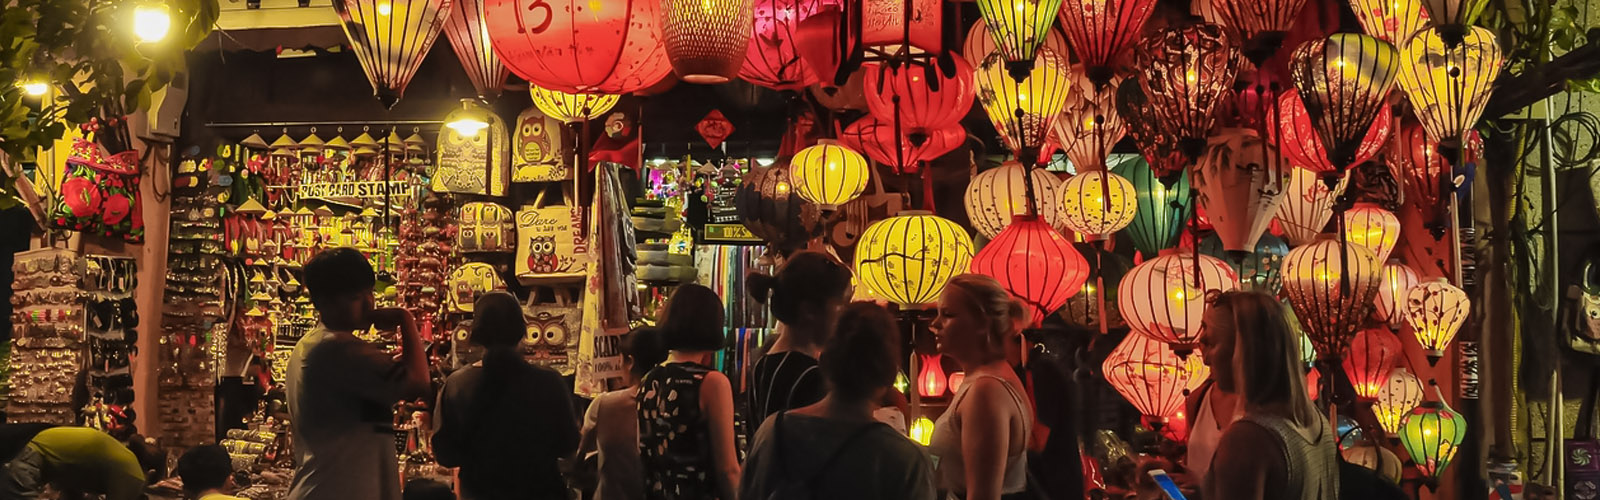 Hoi An Lantern Festival vietnam